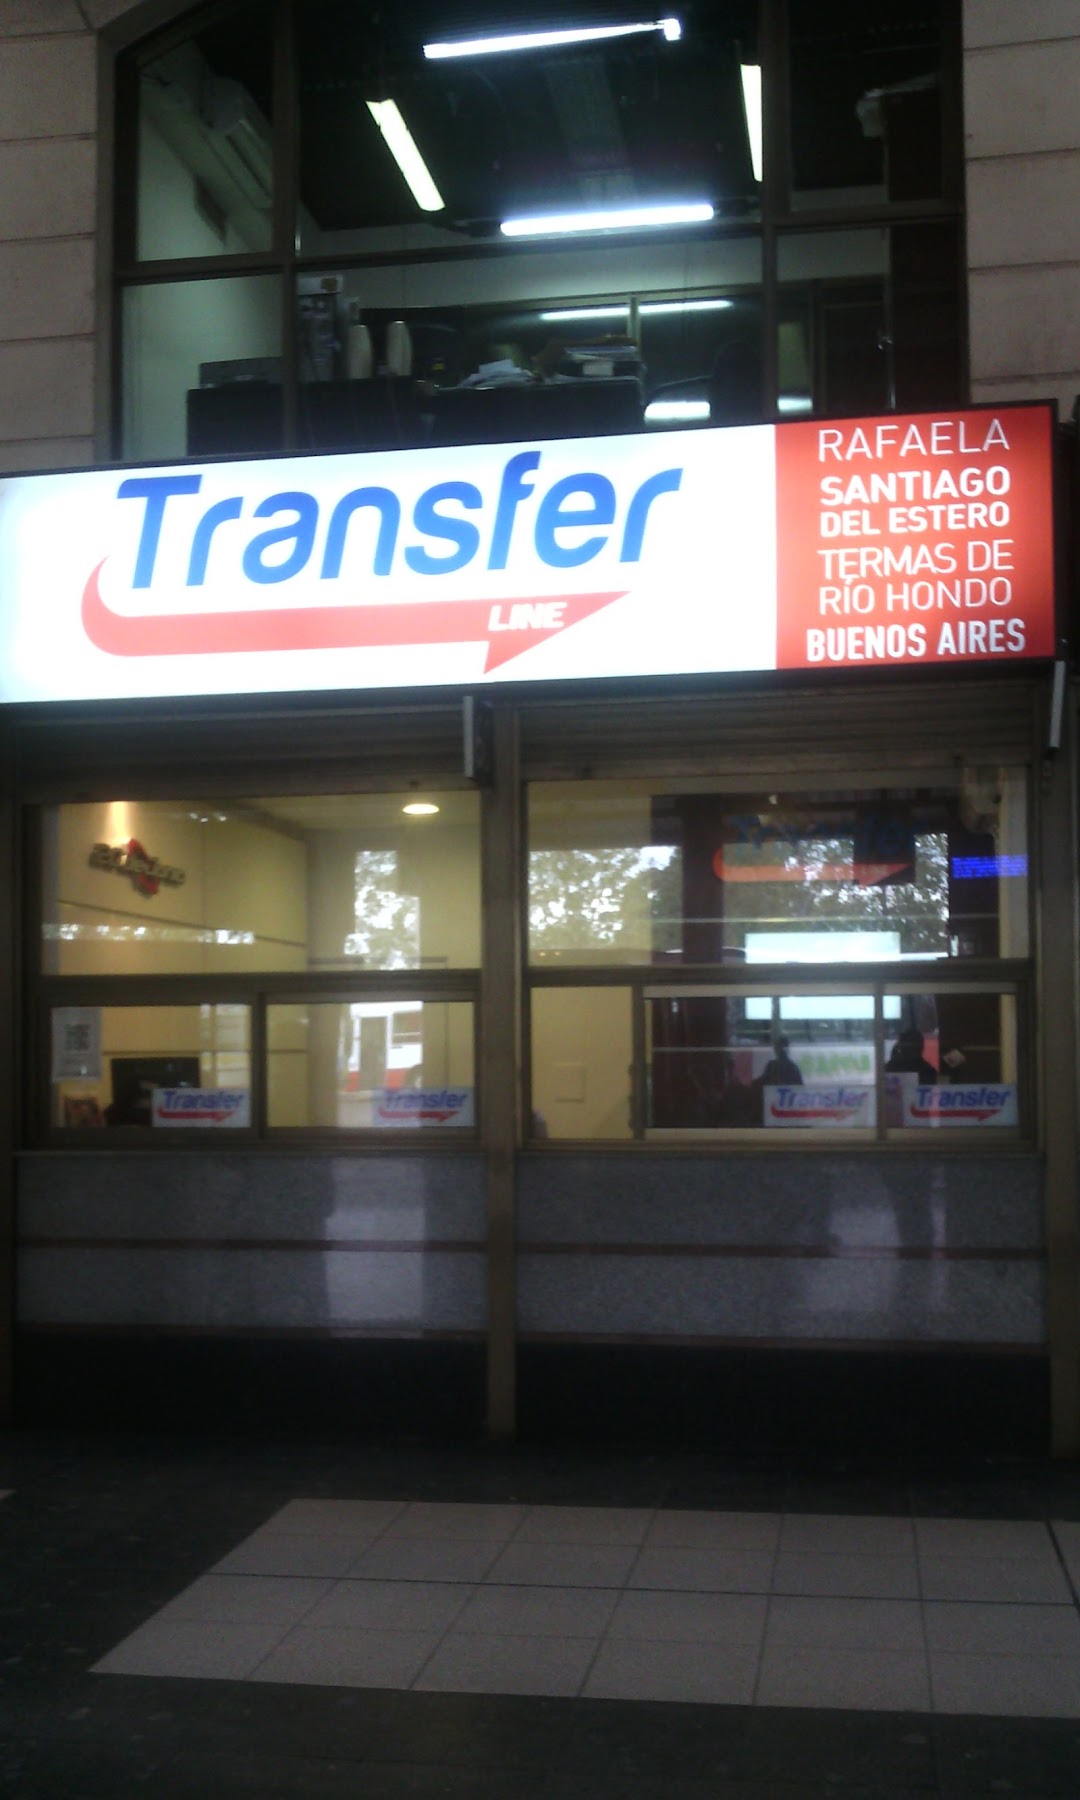 Transfer Line